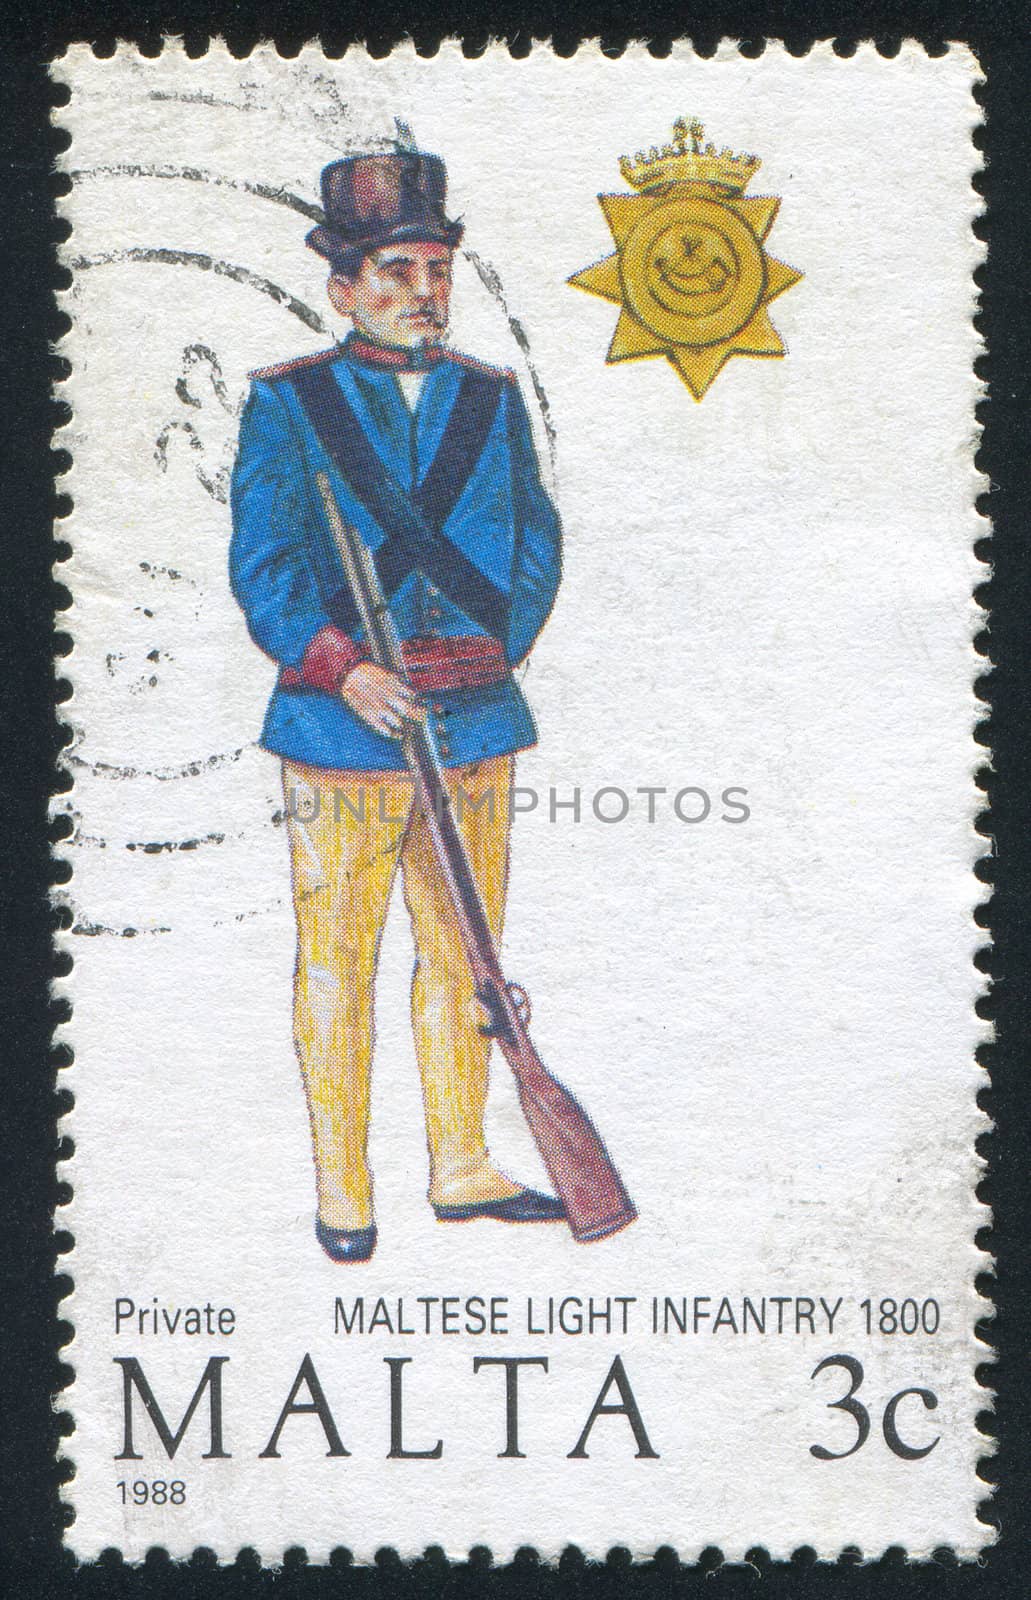 MALTA - CIRCA 1988: stamp printed by Malta, shows Light Infantry Private, circa 1988